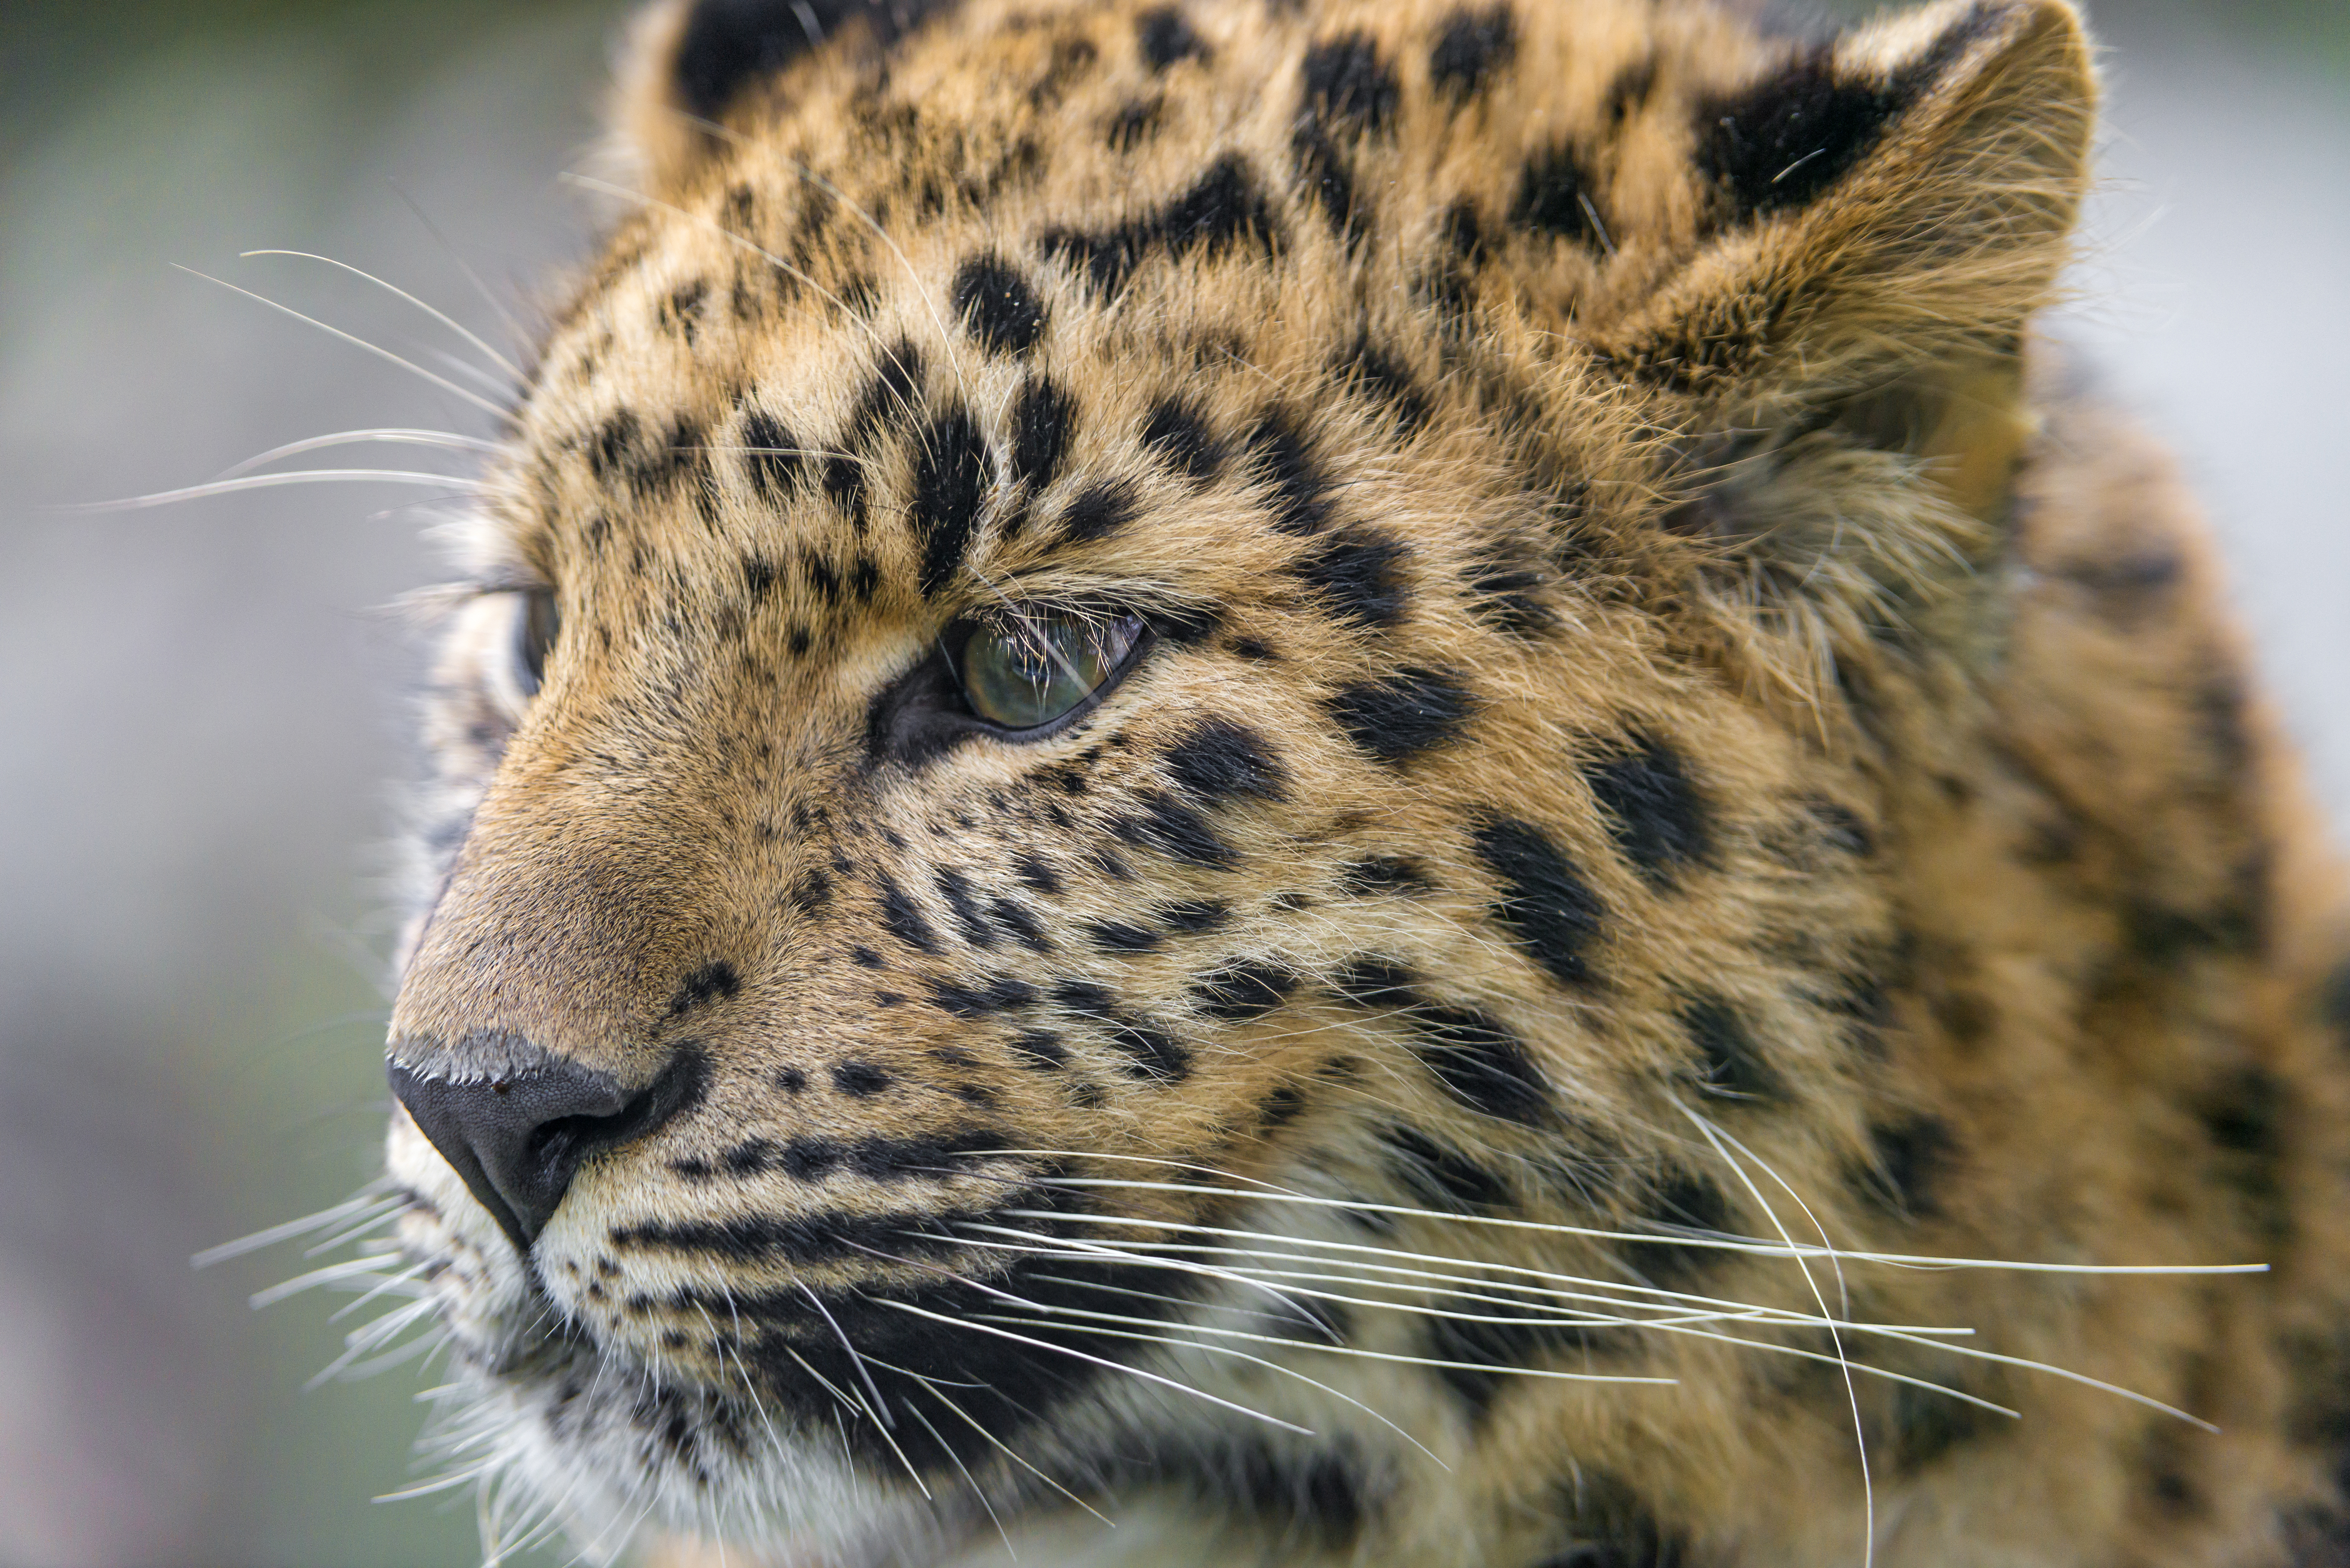 Descarga gratuita de fondo de pantalla para móvil de Animales, Gatos, Leopardo, Cabeza, Macrofotografía.